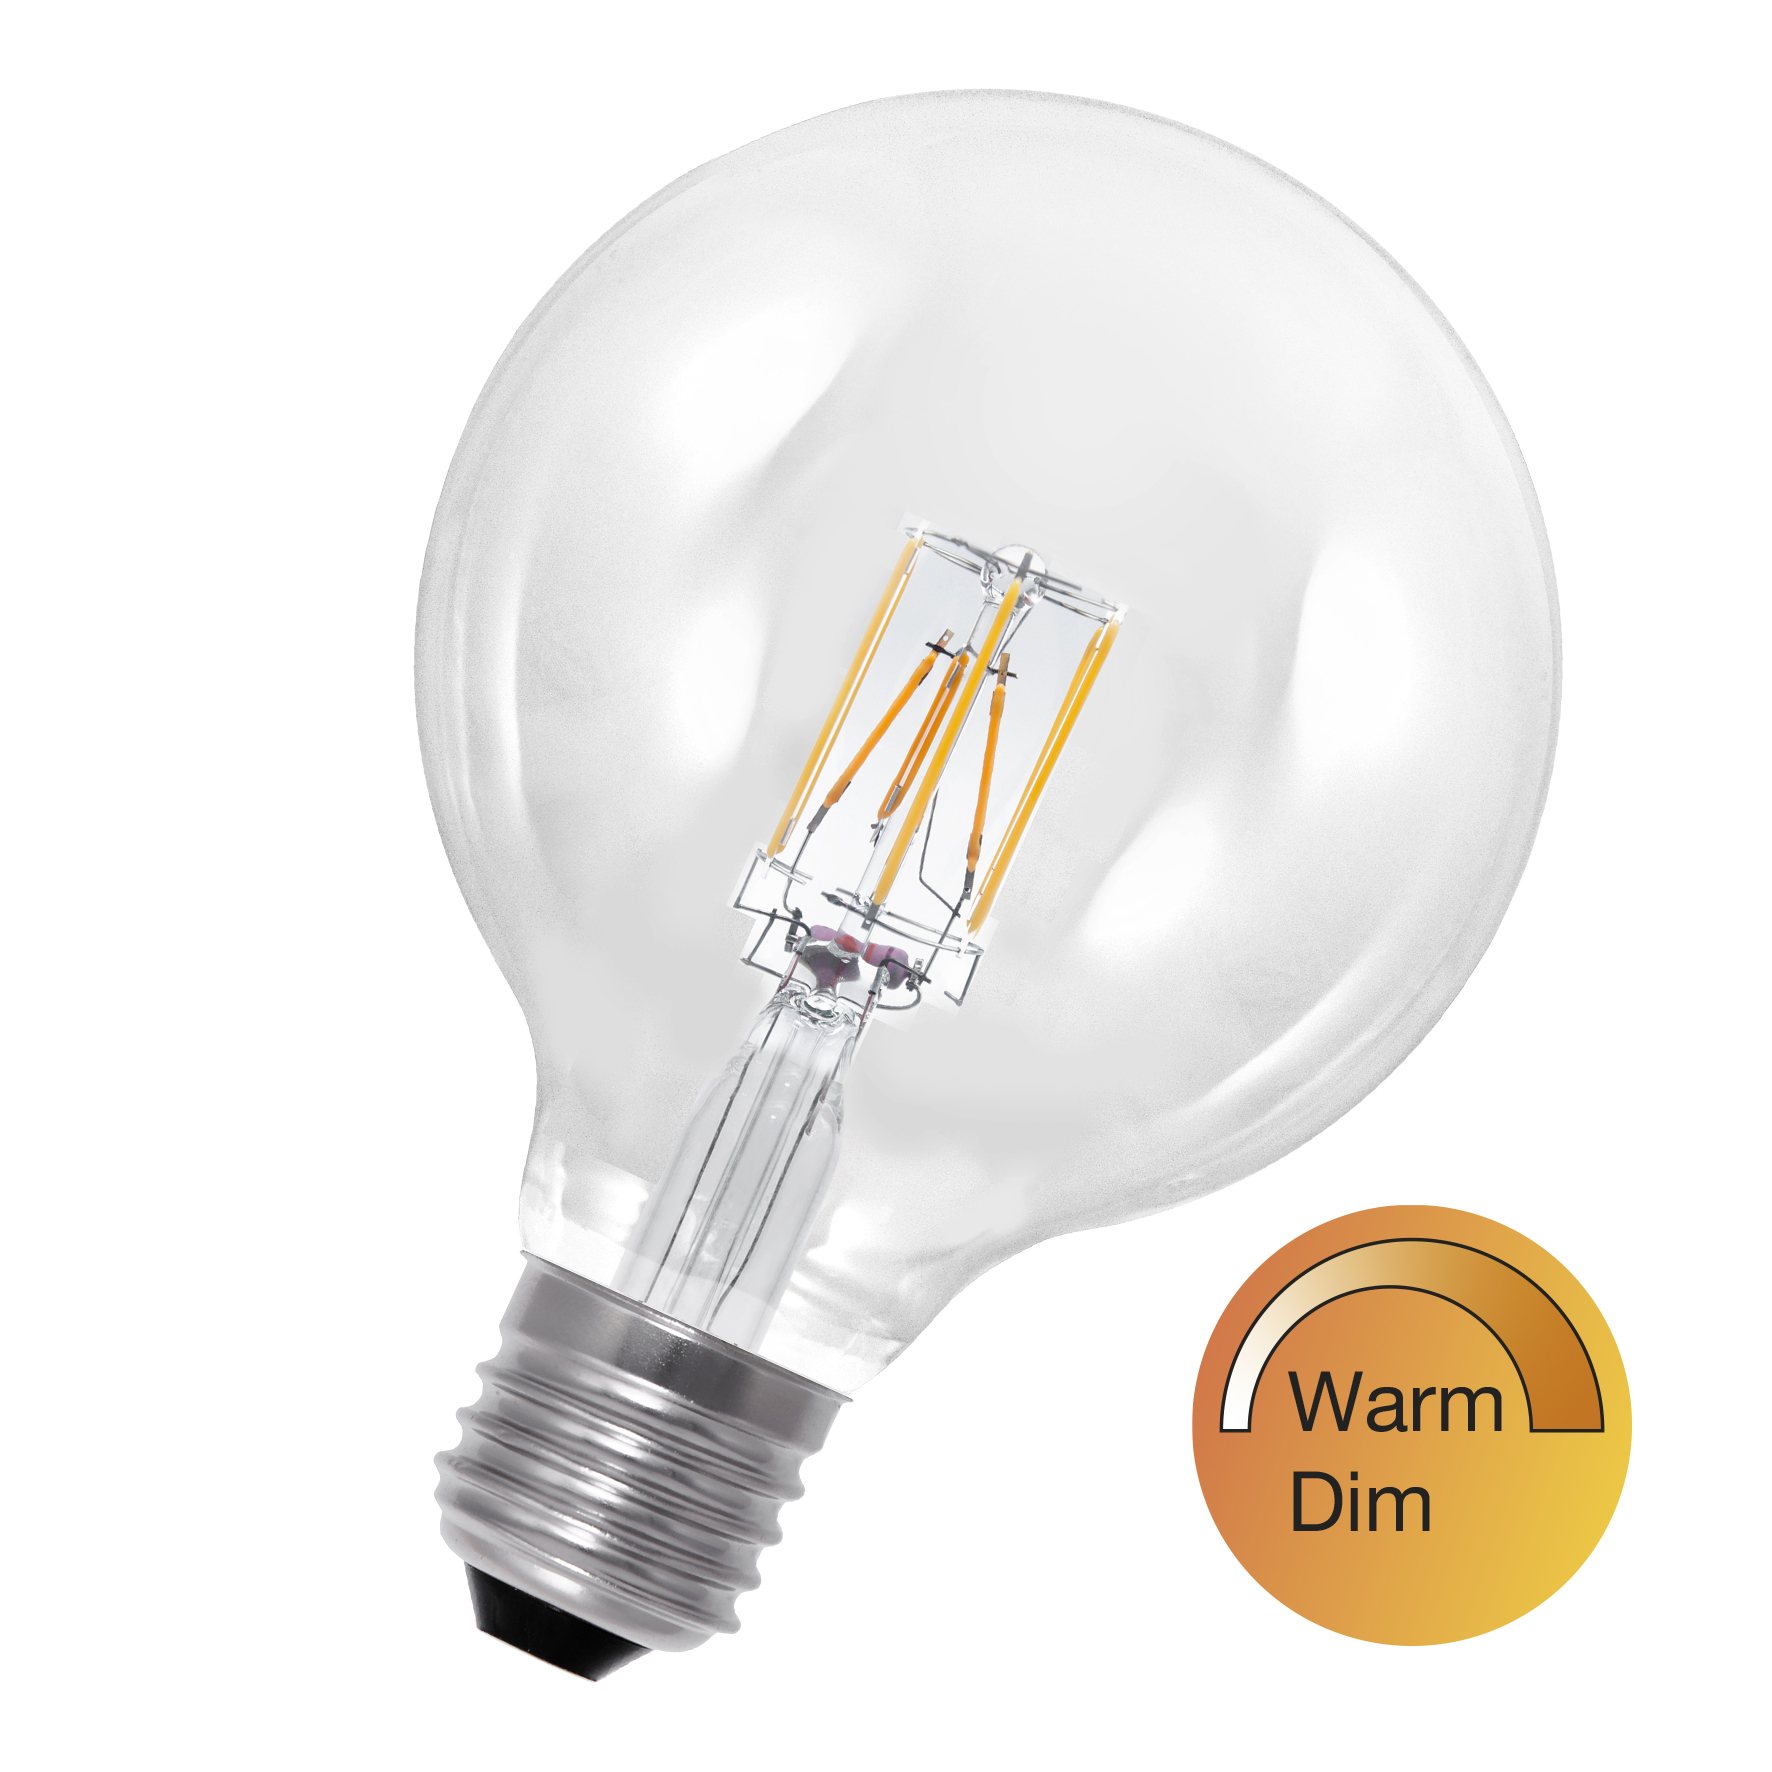 LED FIL WarmDim G125 E27 6W (50W) 640-120lm 927-919 CL